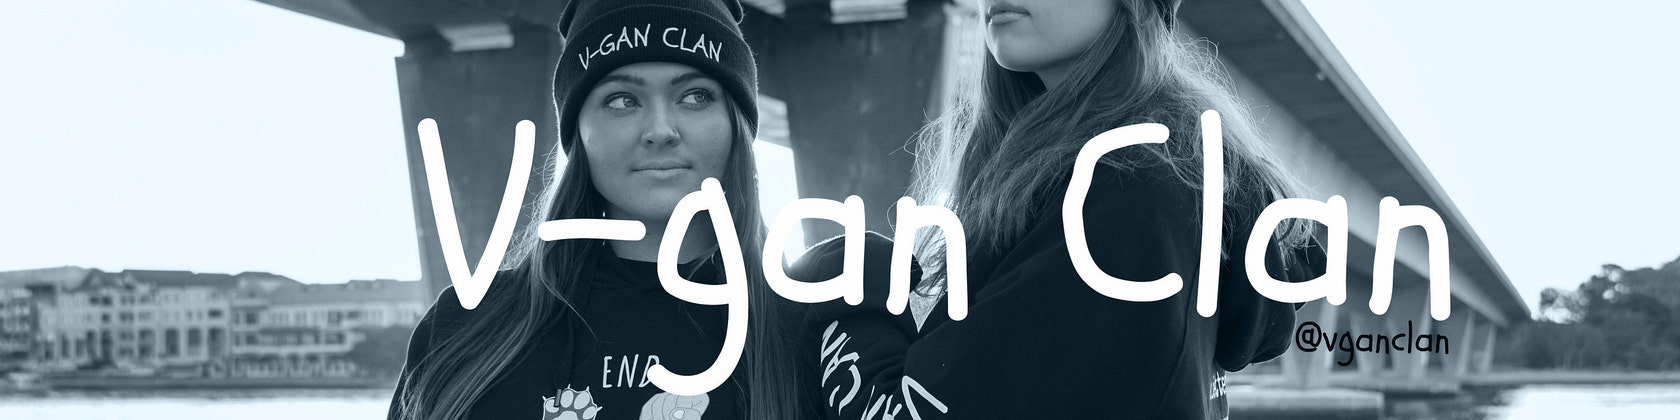 A Vegan Chat With Tash Peterson of V-Gan Clan Clothing - Let's Go Vegan